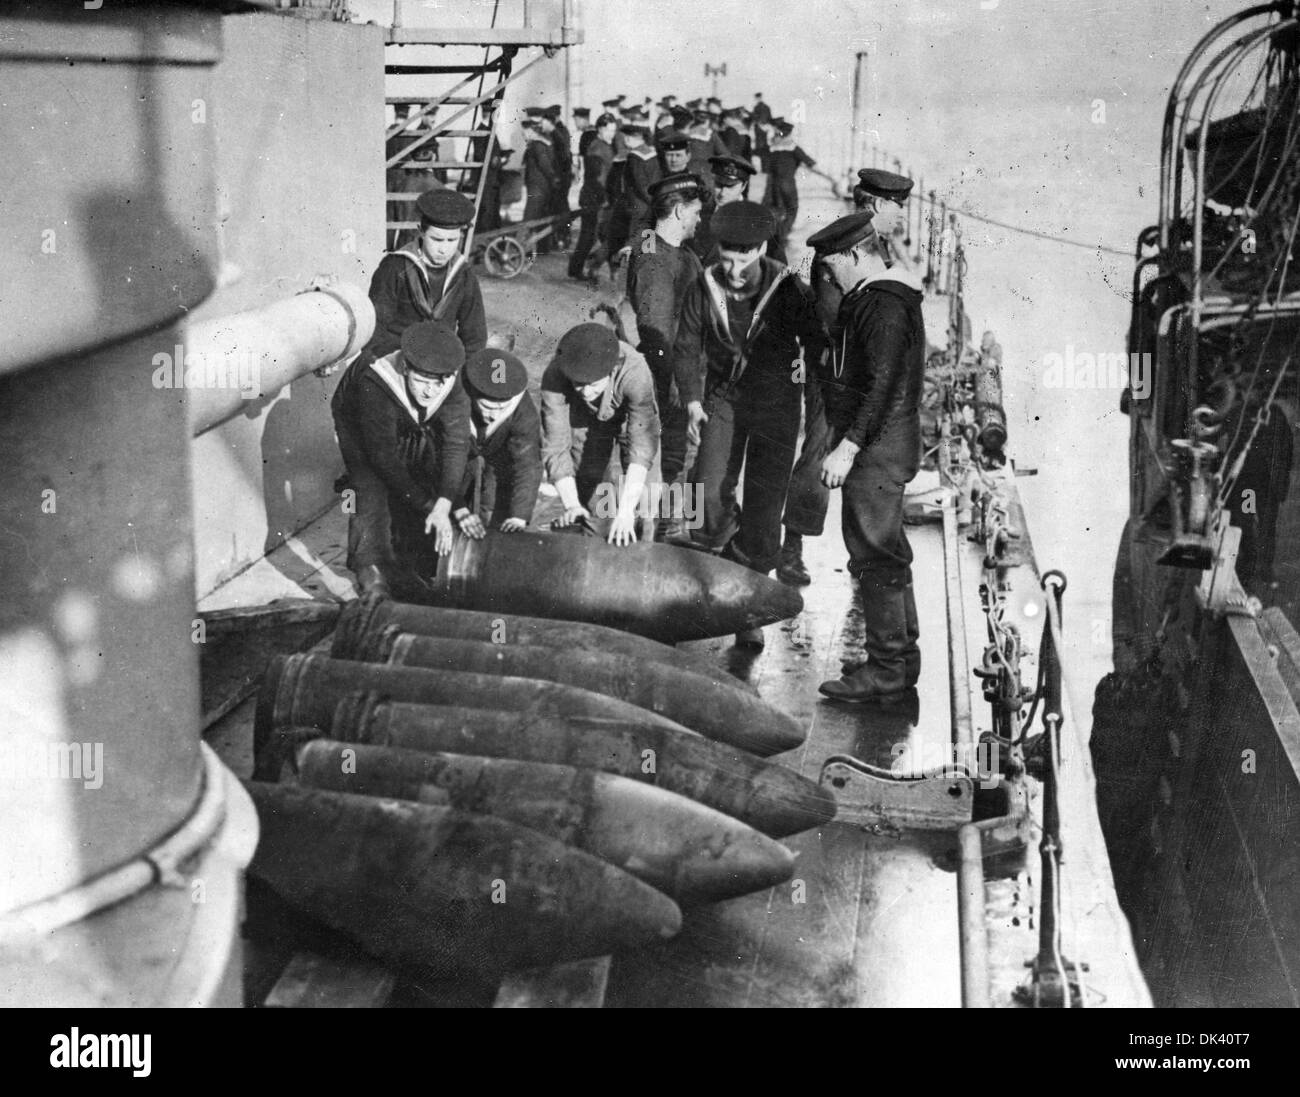 A GROUP OF SAILORS ONBOARD A WORLD WAR ONE BATTLESHIP PREPARE SHELLS FOR BATTLE Stock Photo